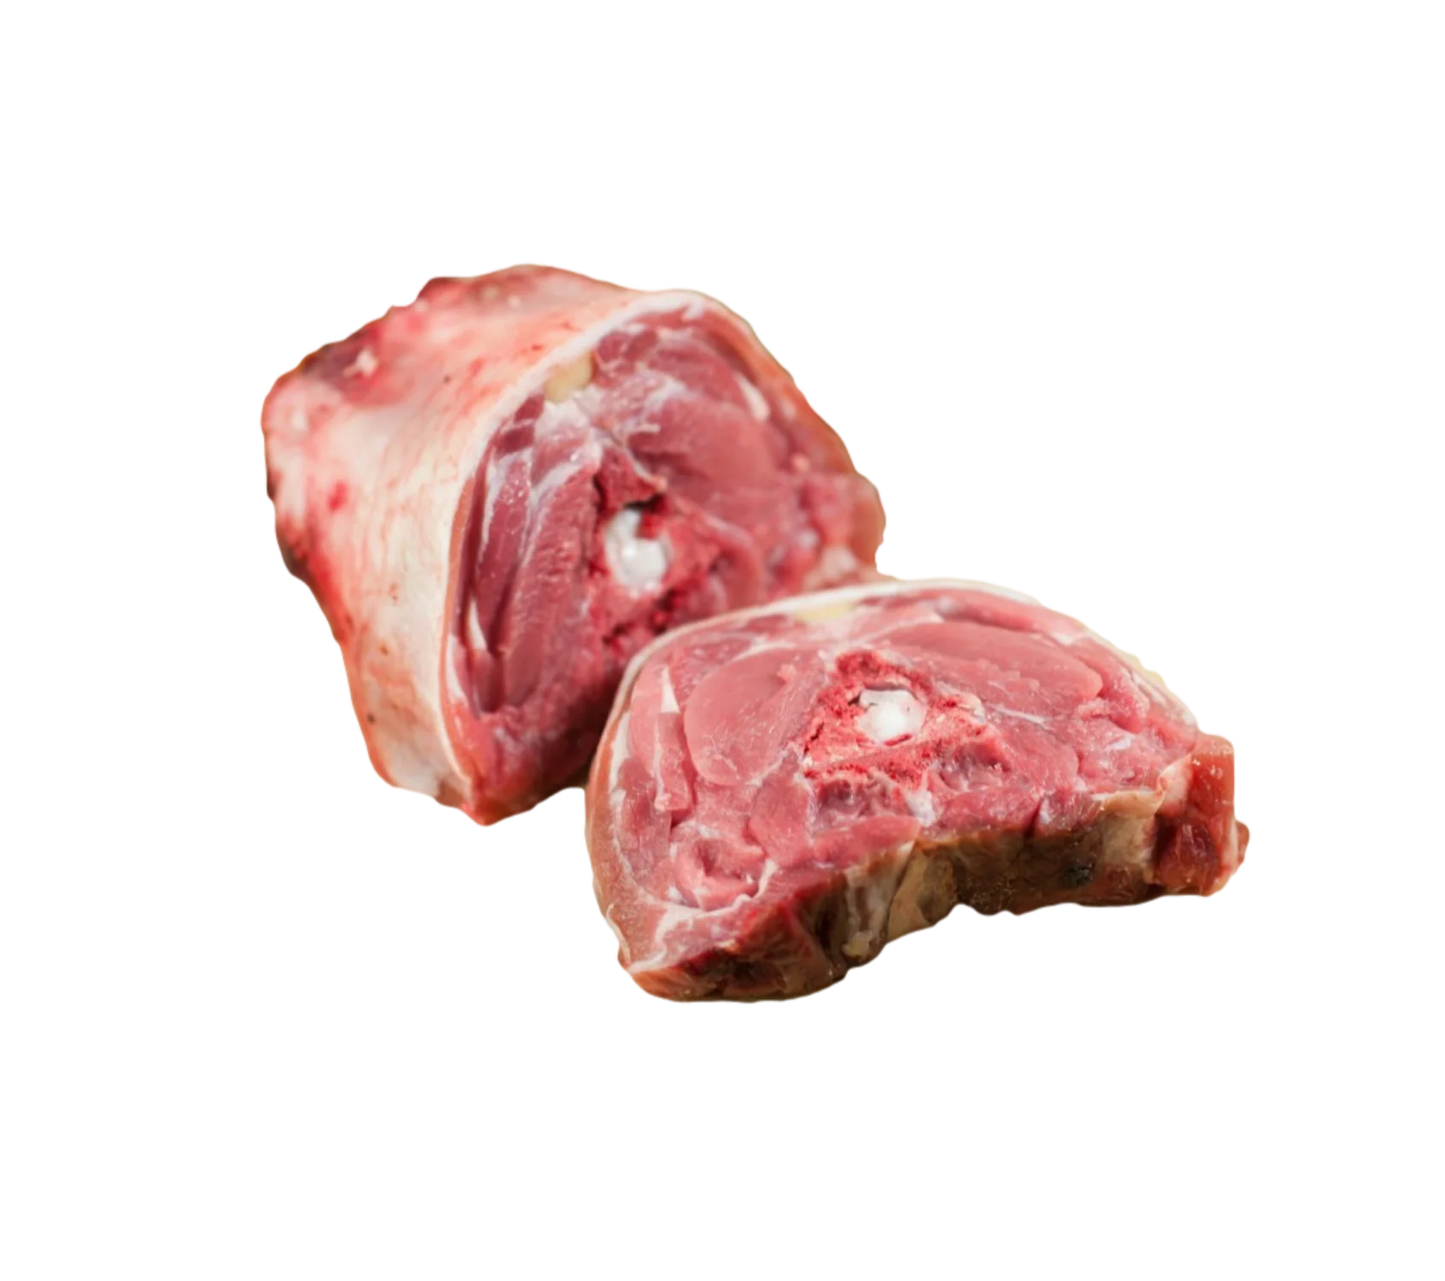 Lamb Neck Steak